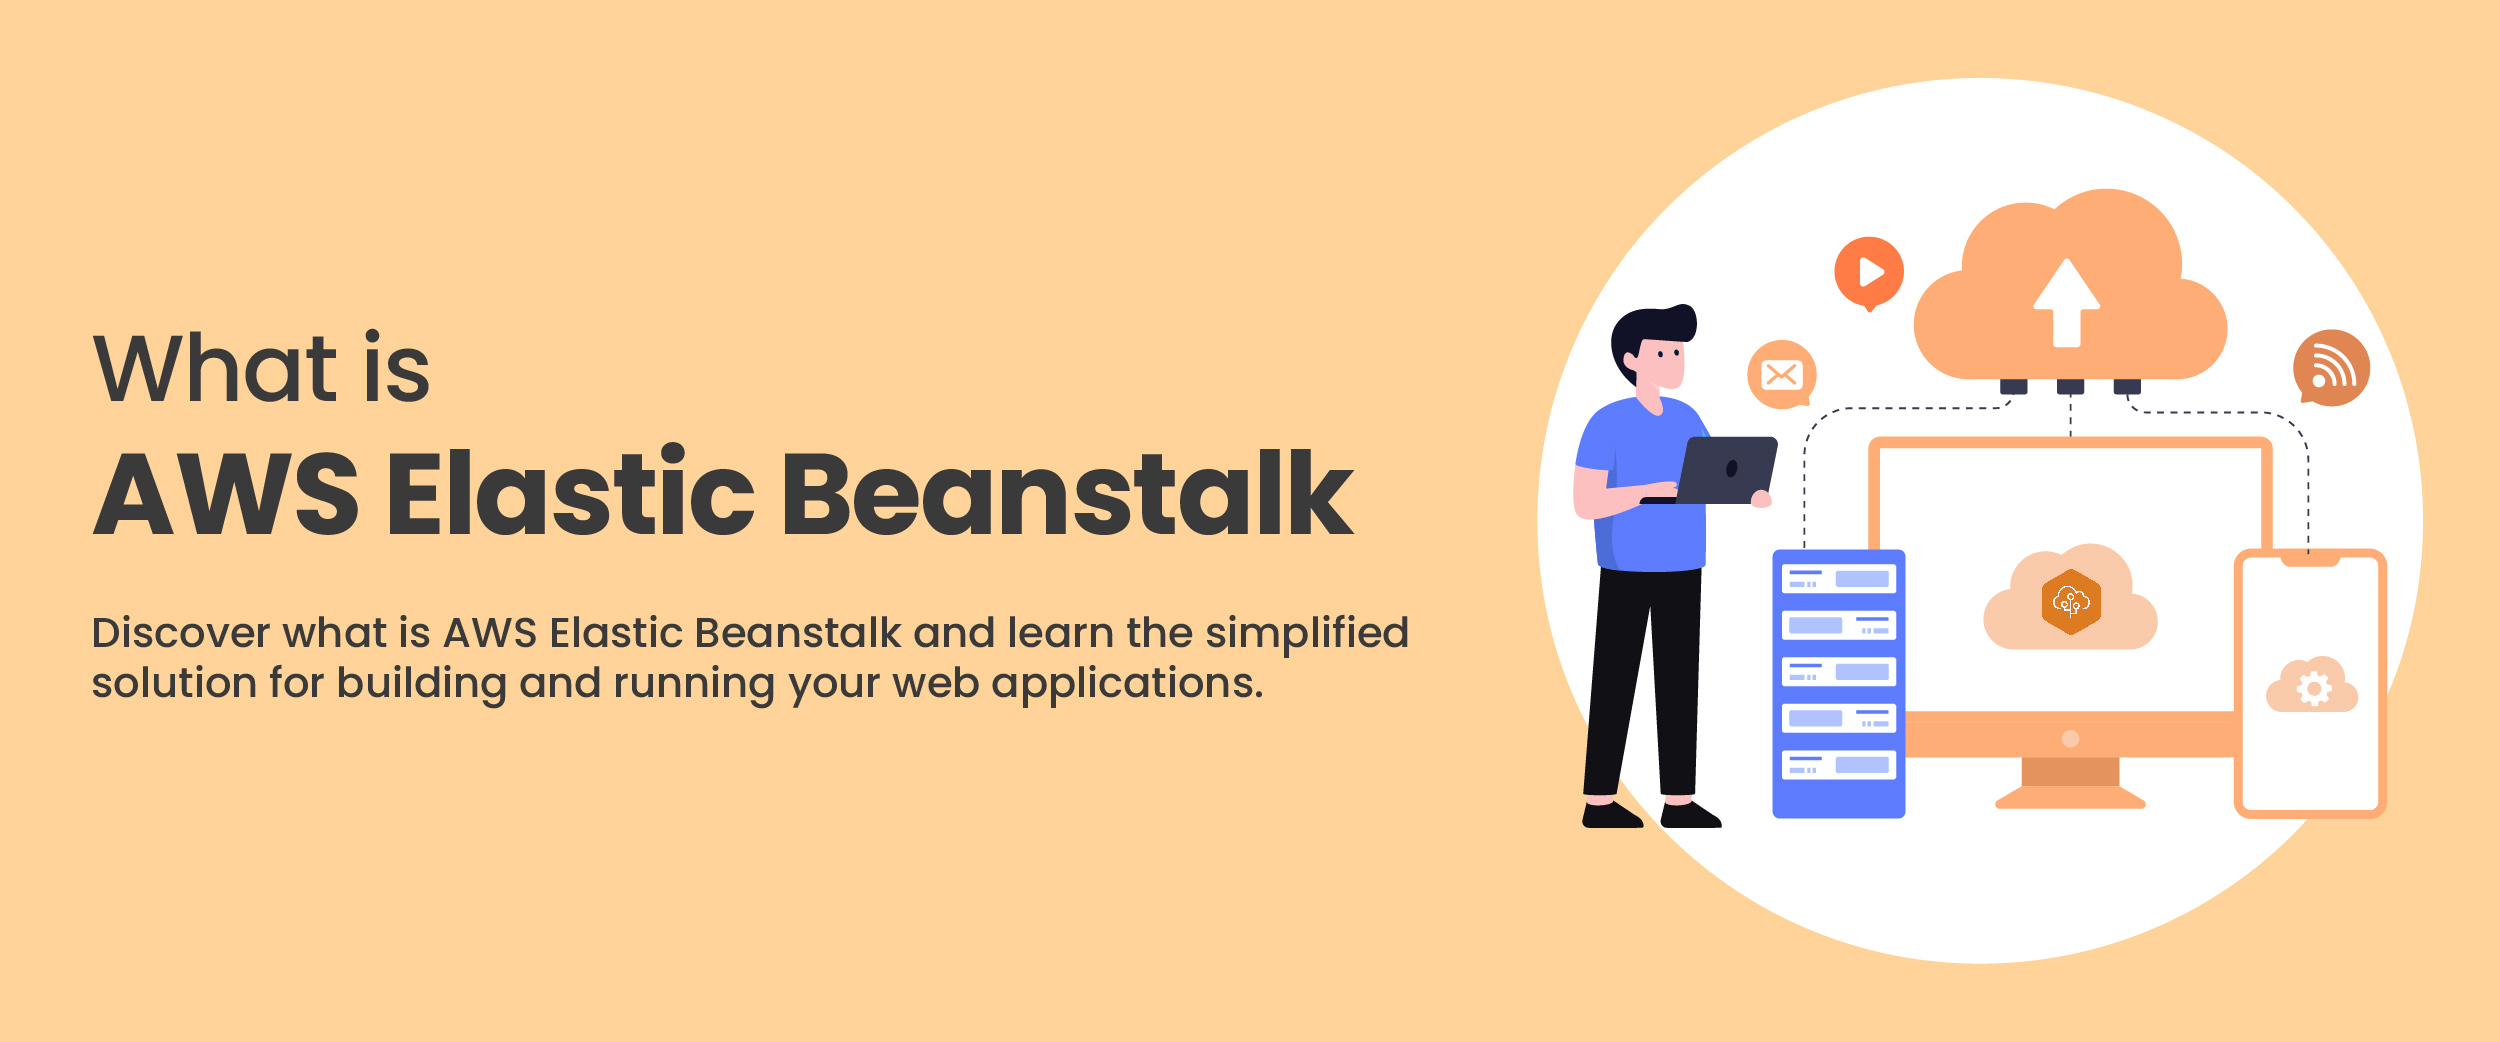 What is aws elastic beanstalk